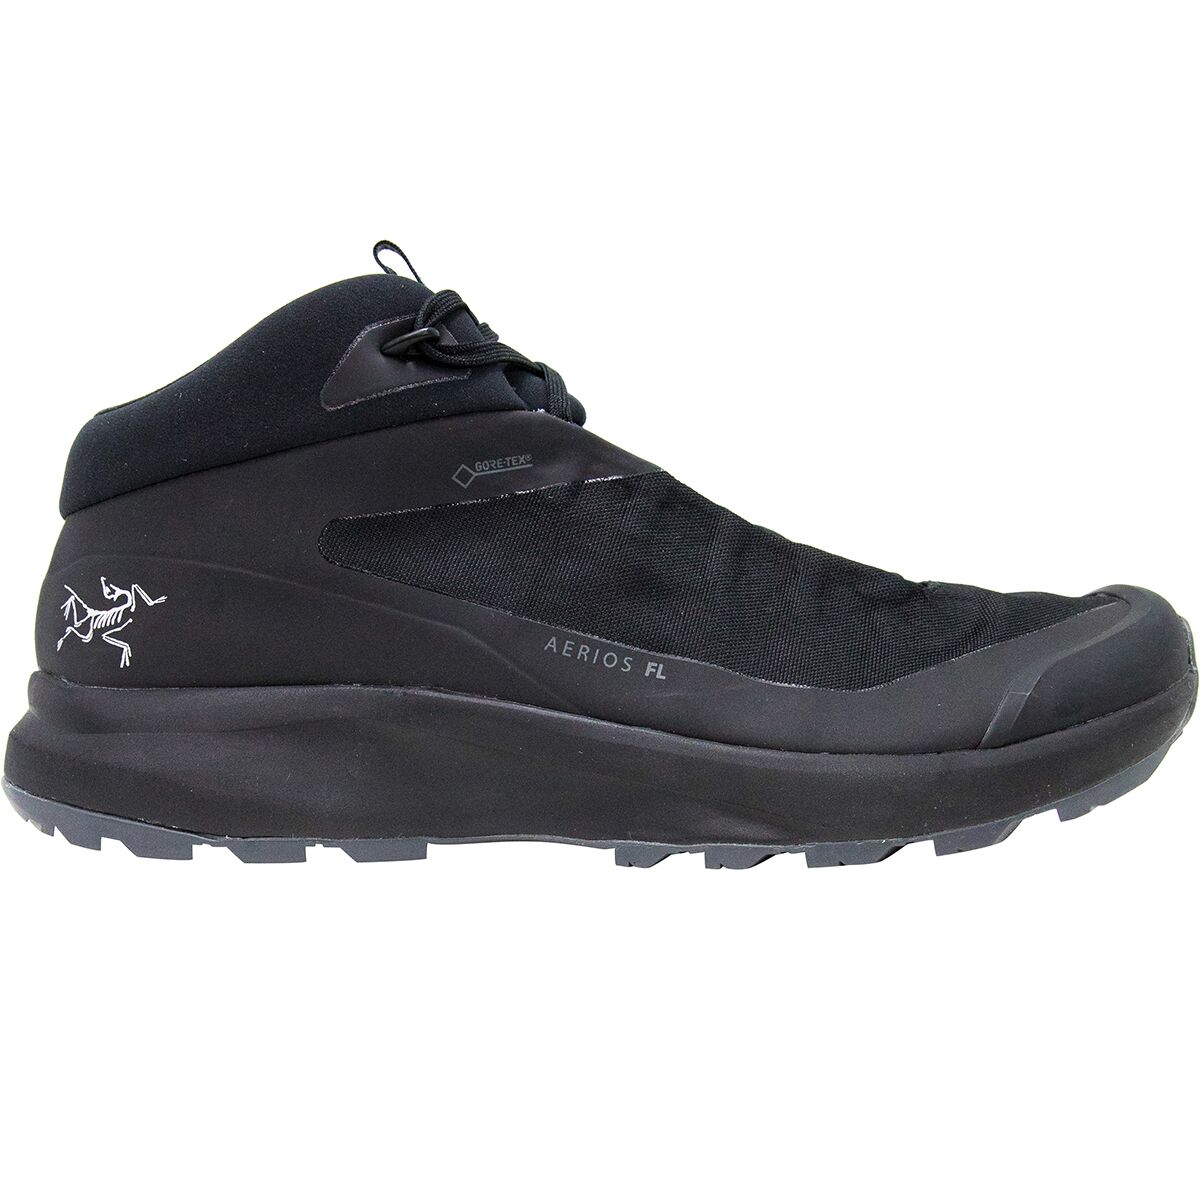 Arc'teryx Aerios FL GTX Mid Hiking Shoe - Men's | Backcountry.com